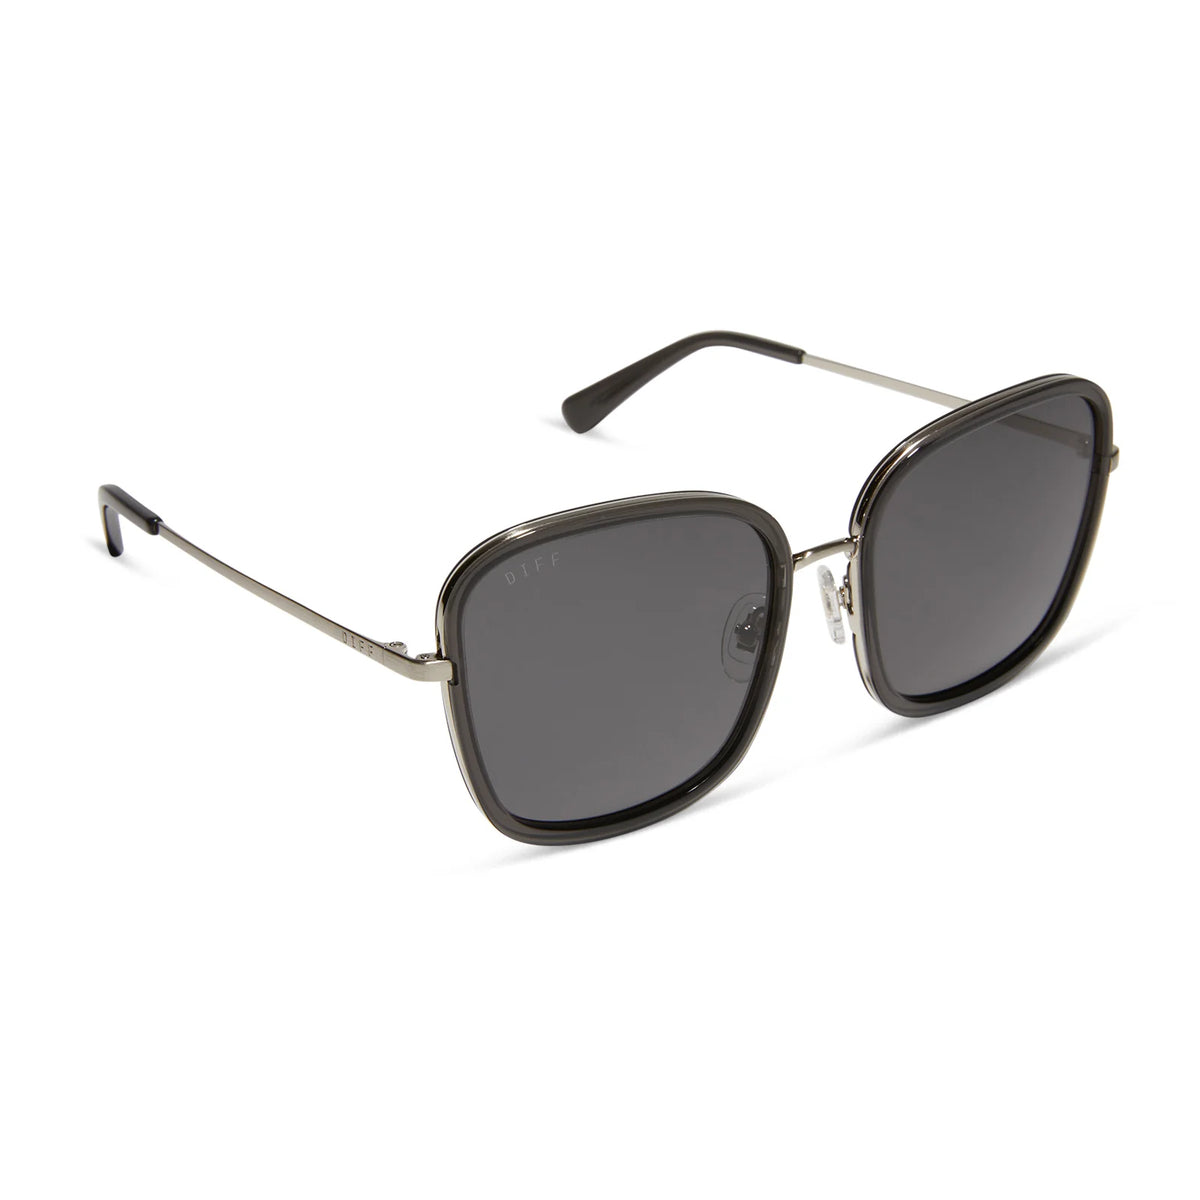 DIFF Eyewear Sunglasses - Genevieve Black Smoke Crystal + Grey Polarized